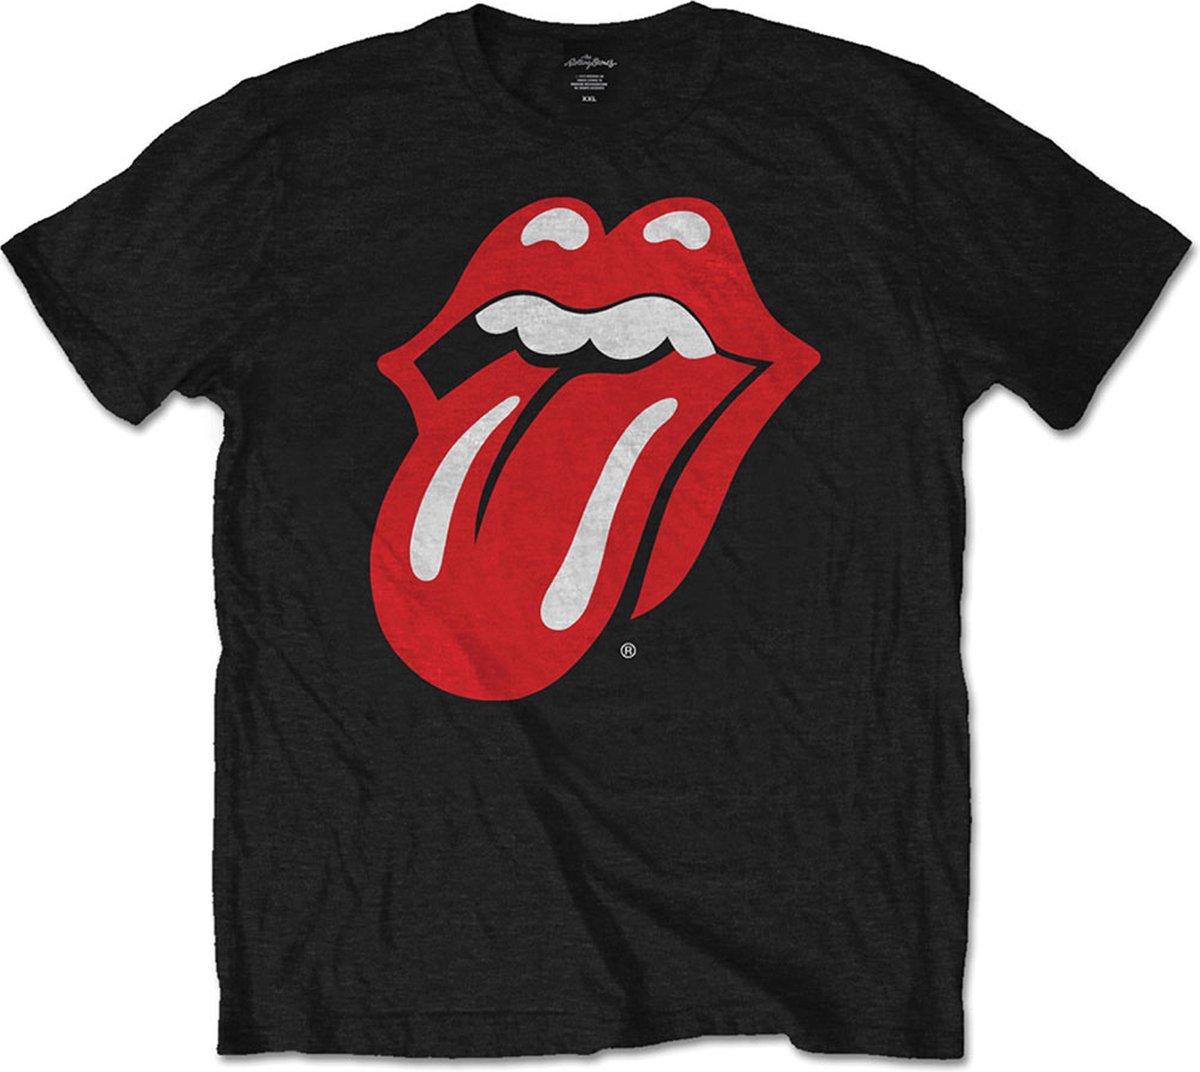 Rolling Stones Shirt – Classic Tong maat S